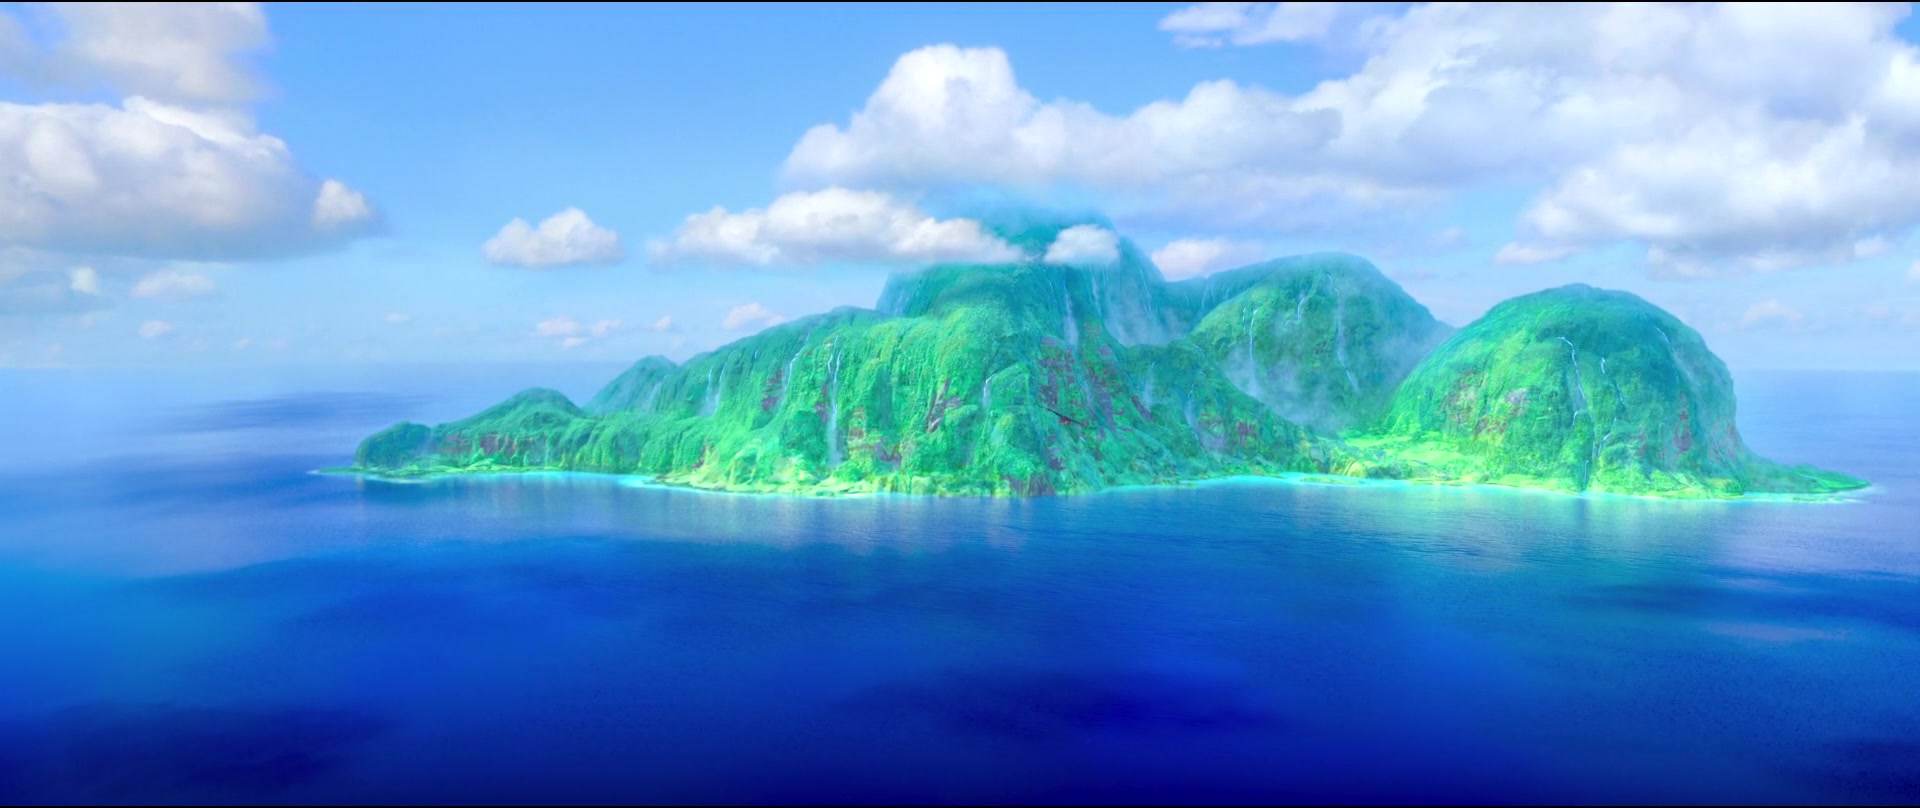 Sleeping island. Тефити остров. Тефити из Моаны остров. Остров из Моаны Тефити в реальности. Остров Таити Моана.